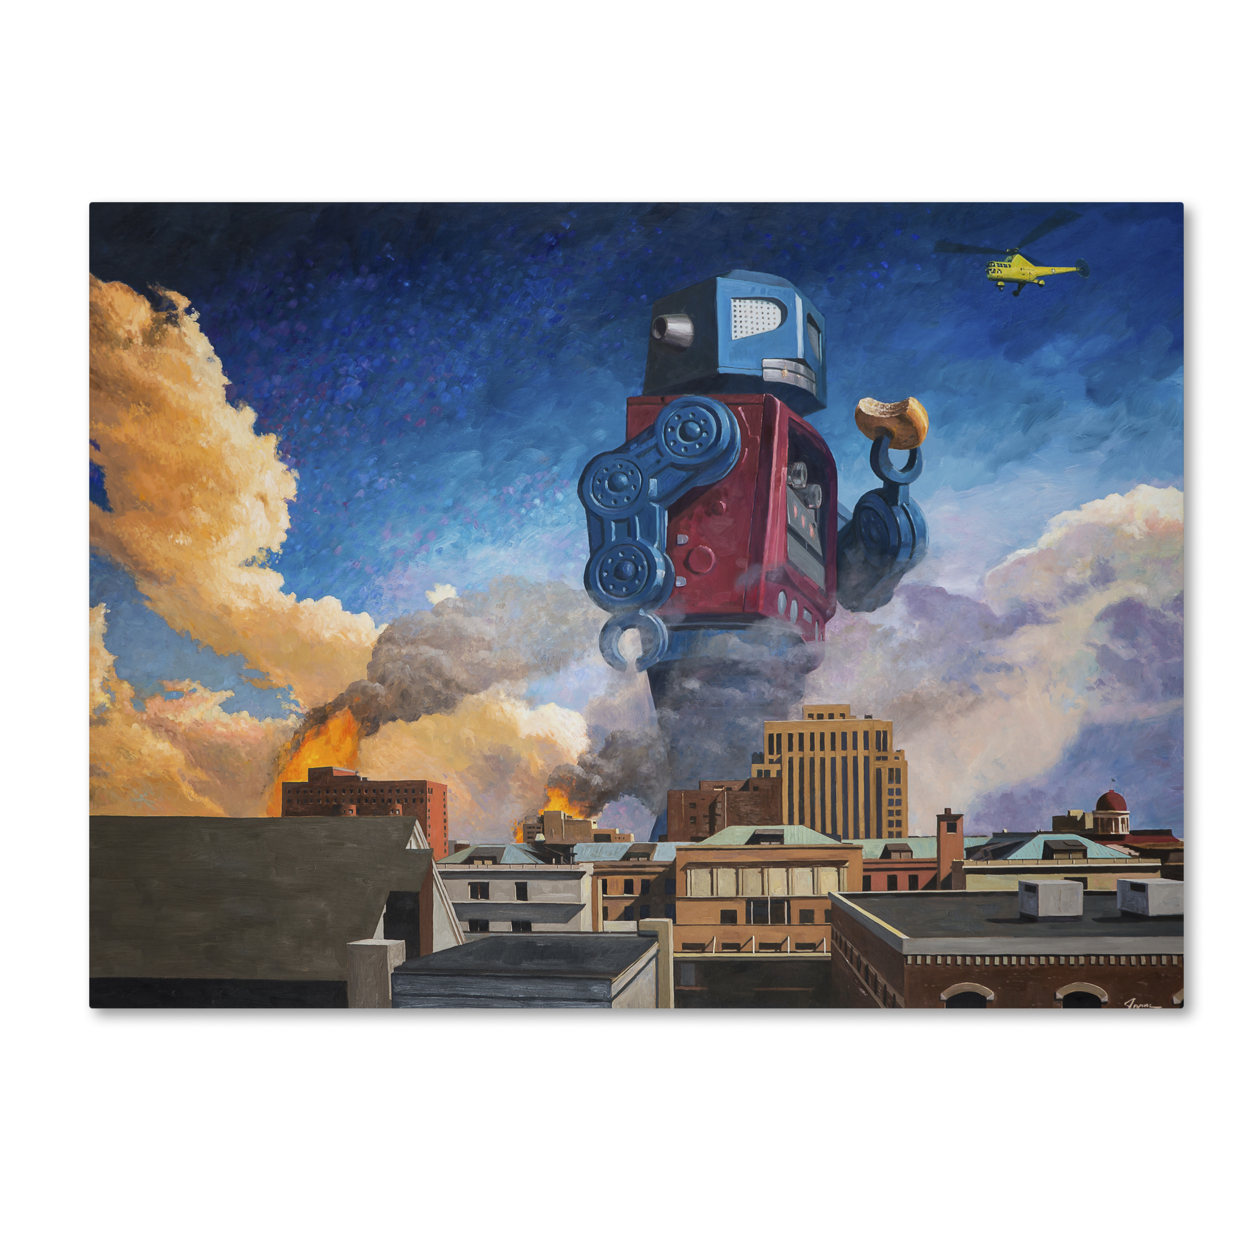 Eric Joyner 'Lunchbreak' Canvas Wall Art 35 X 47 Inches